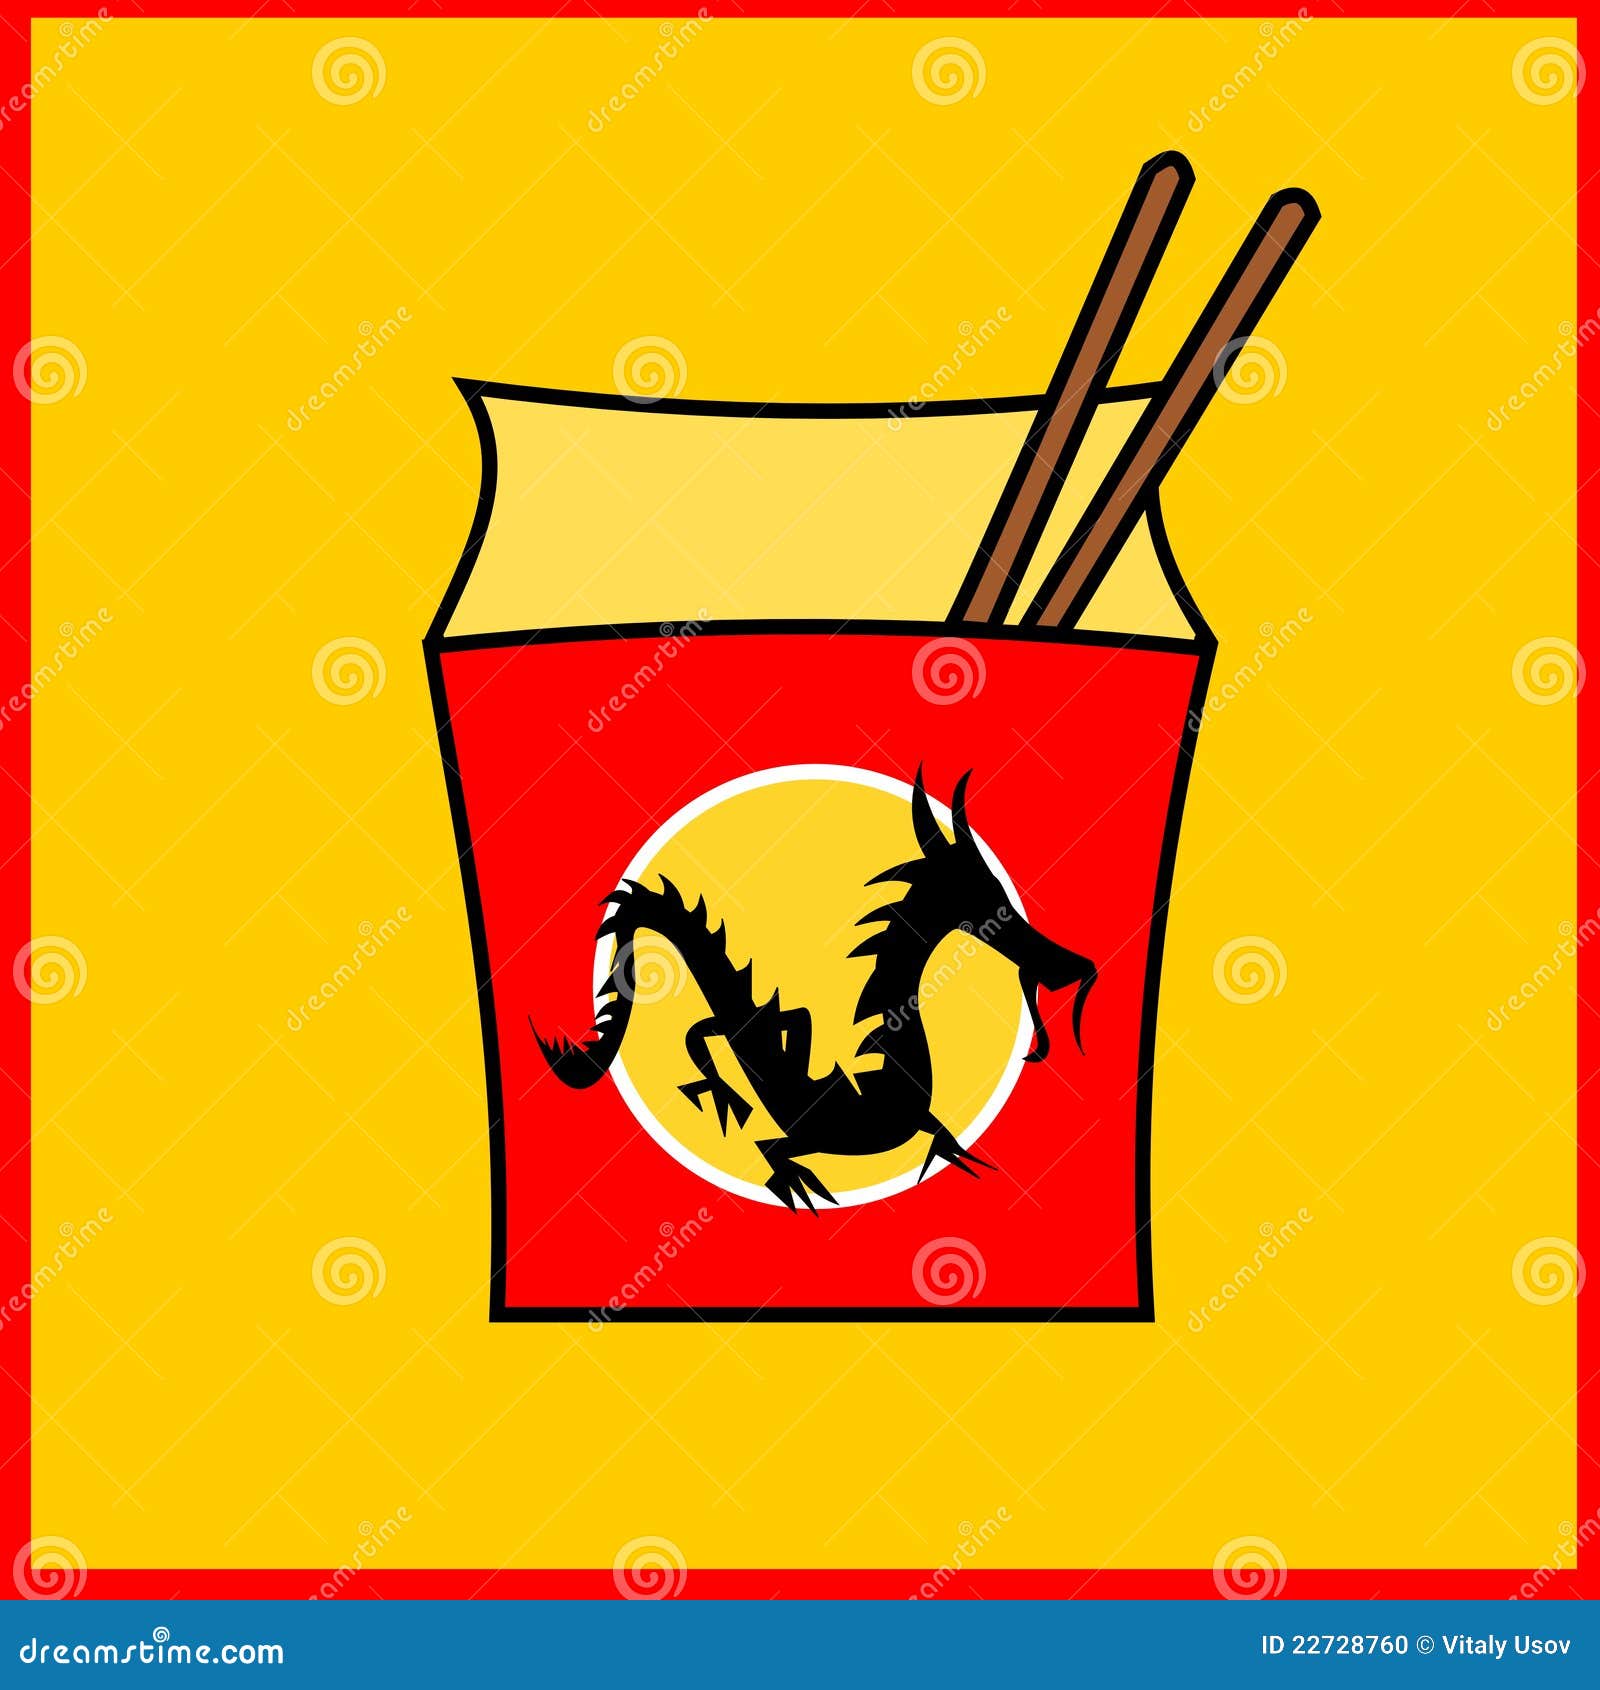 chinese fastfood restaurant logo